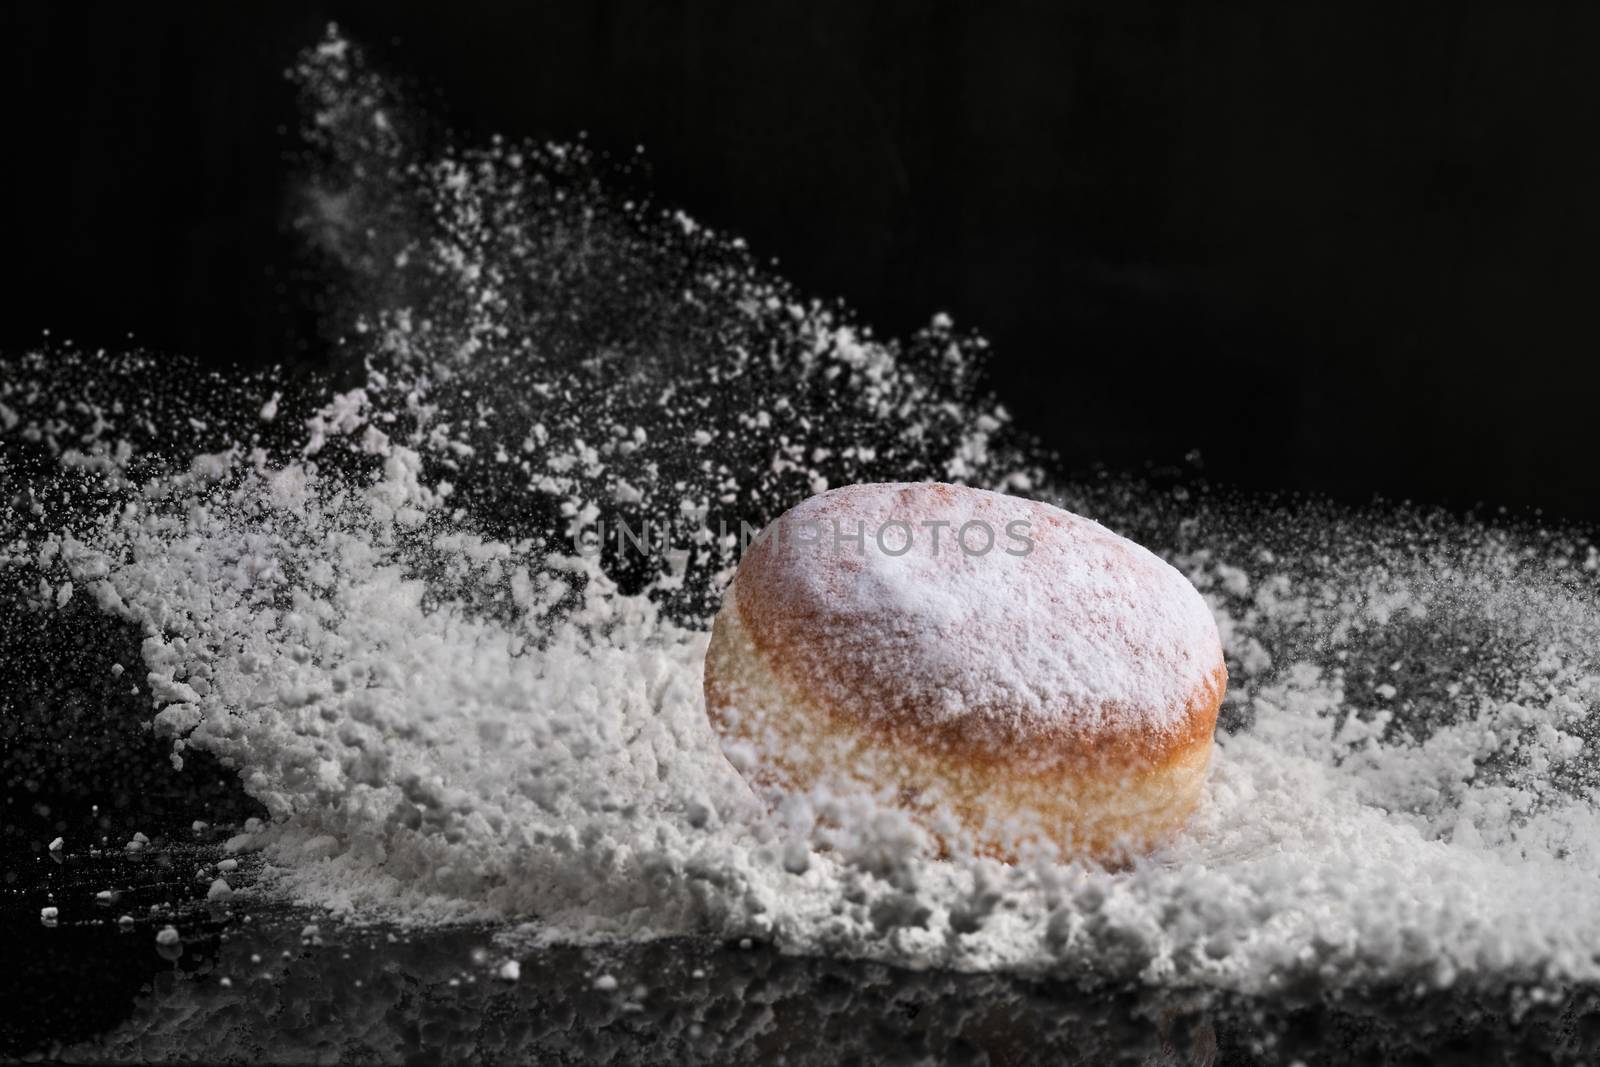 Berliner donut with jam stuffed falls into flour. by Fischeron